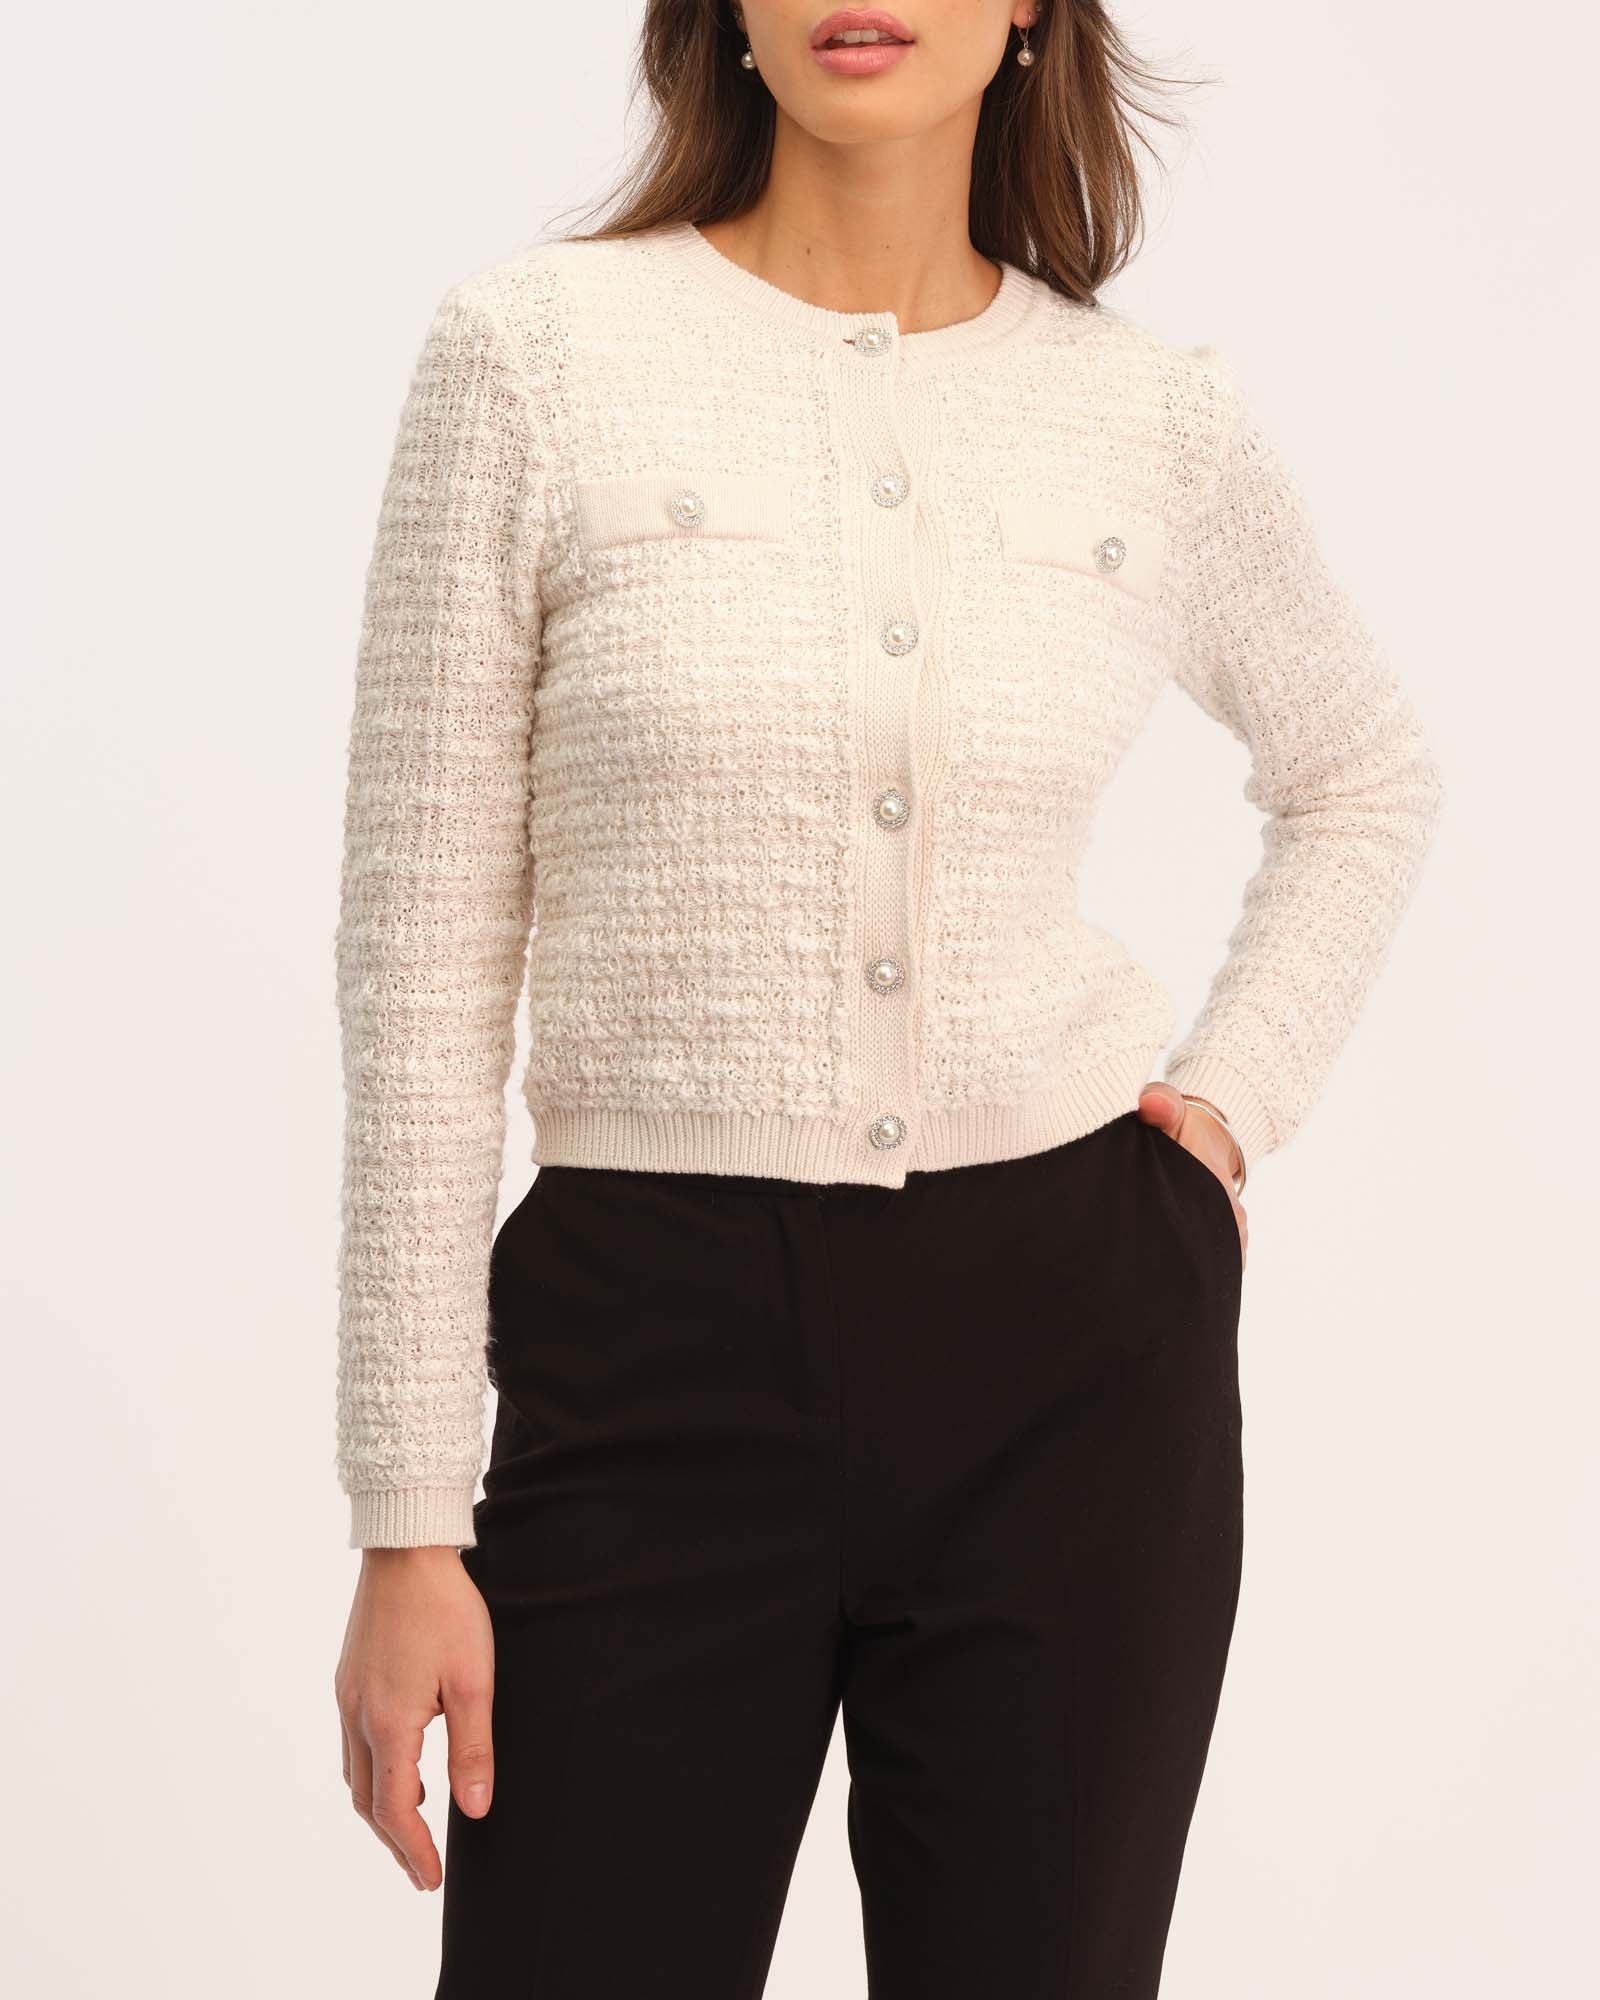 T Tahari Women's Pearl Rhinestone Button Front Sweater Jacket | JANE + MERCER